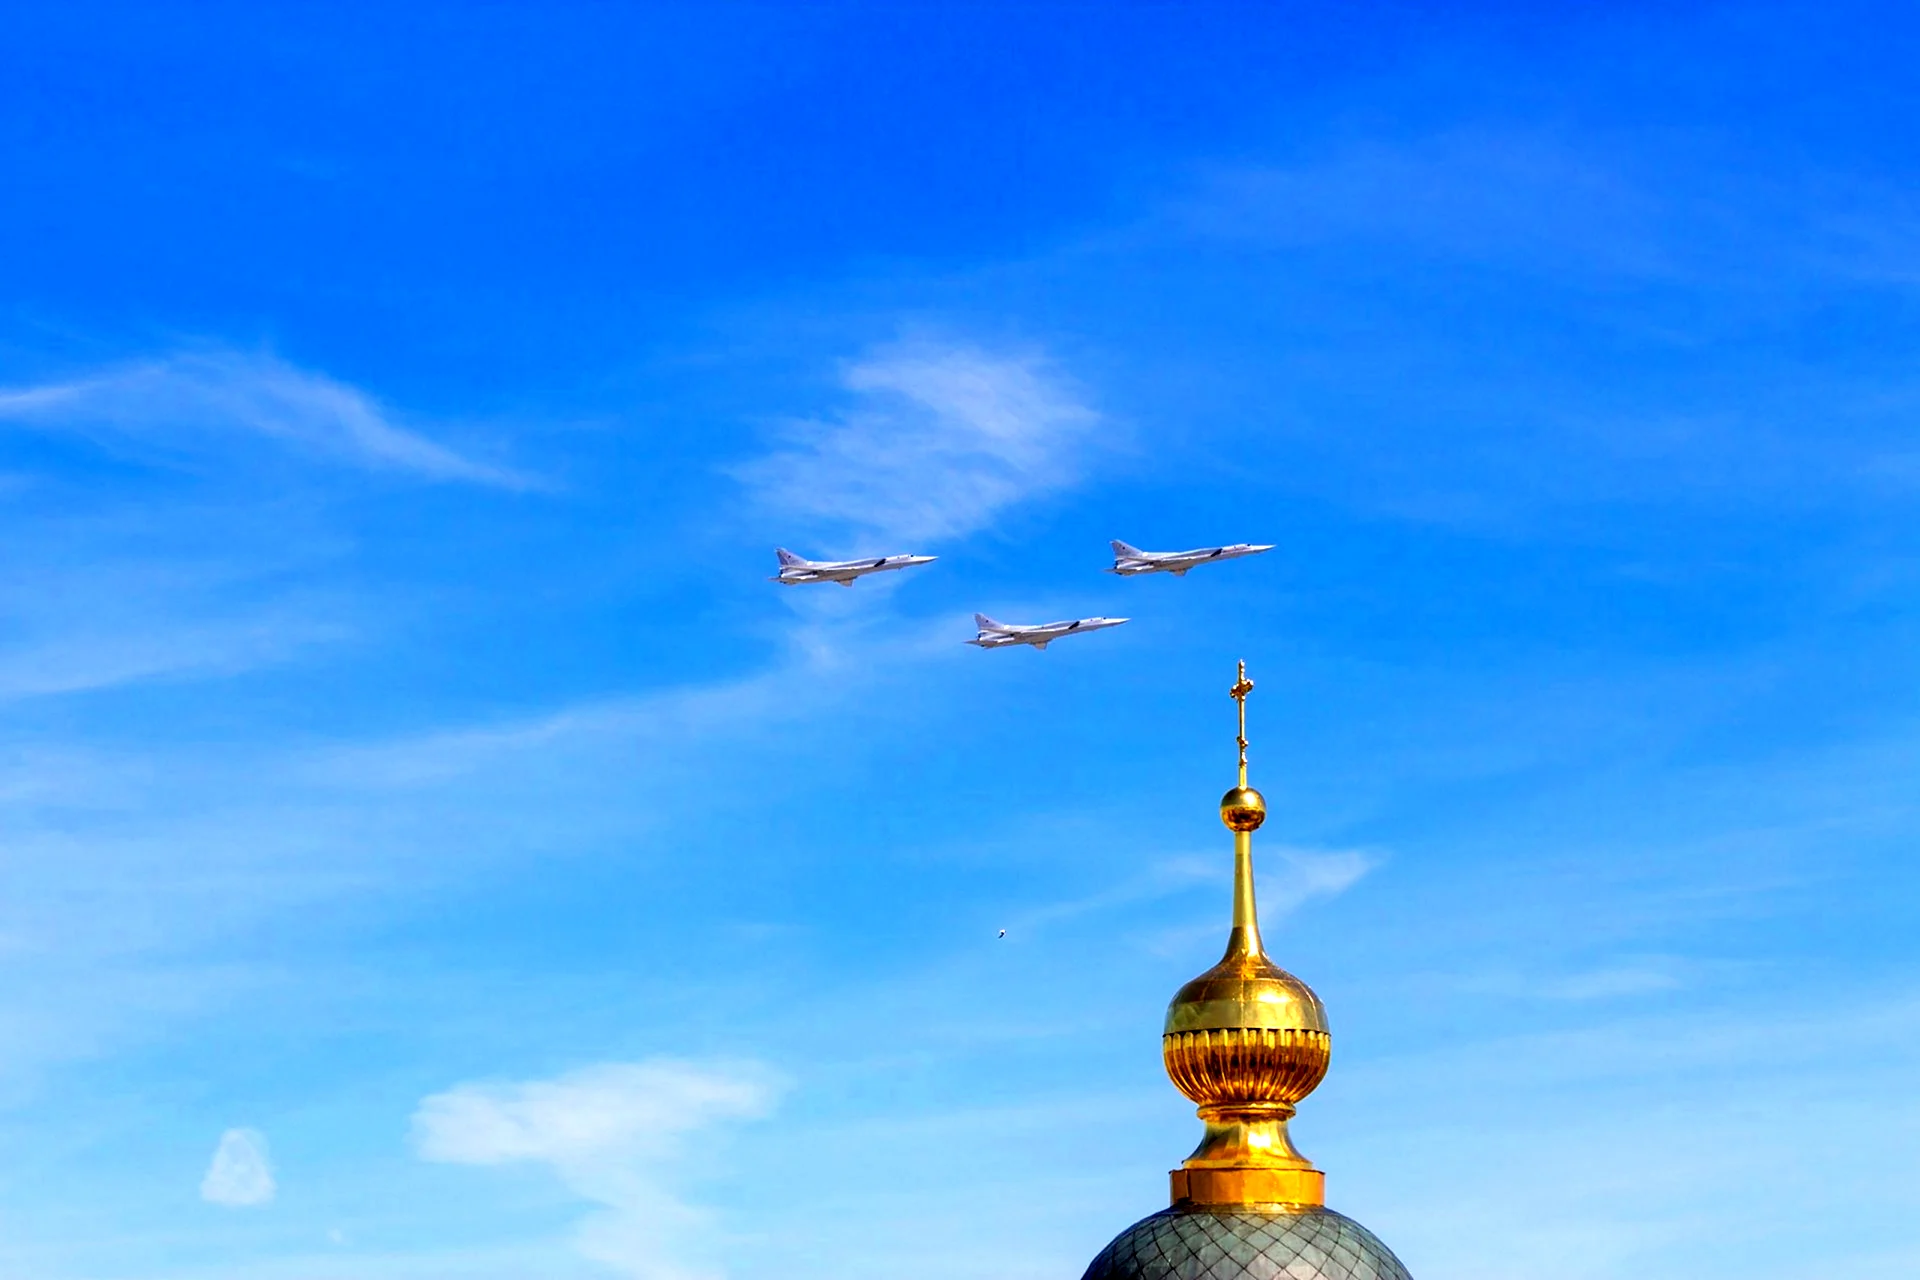 Небо храм православный